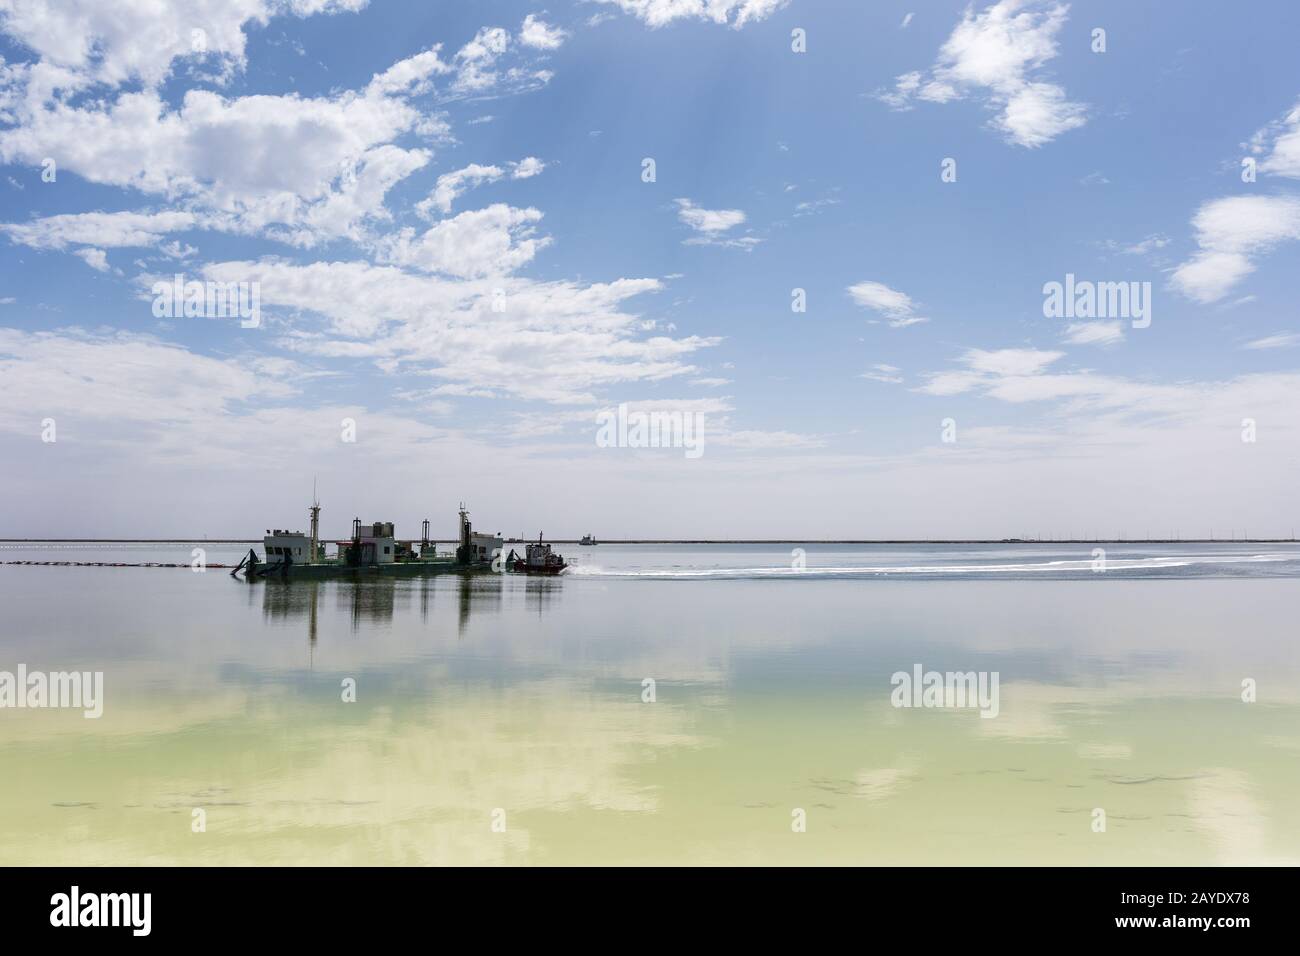 salt mining ship and blue sky reflection in qarhan salt lake Stock Photo